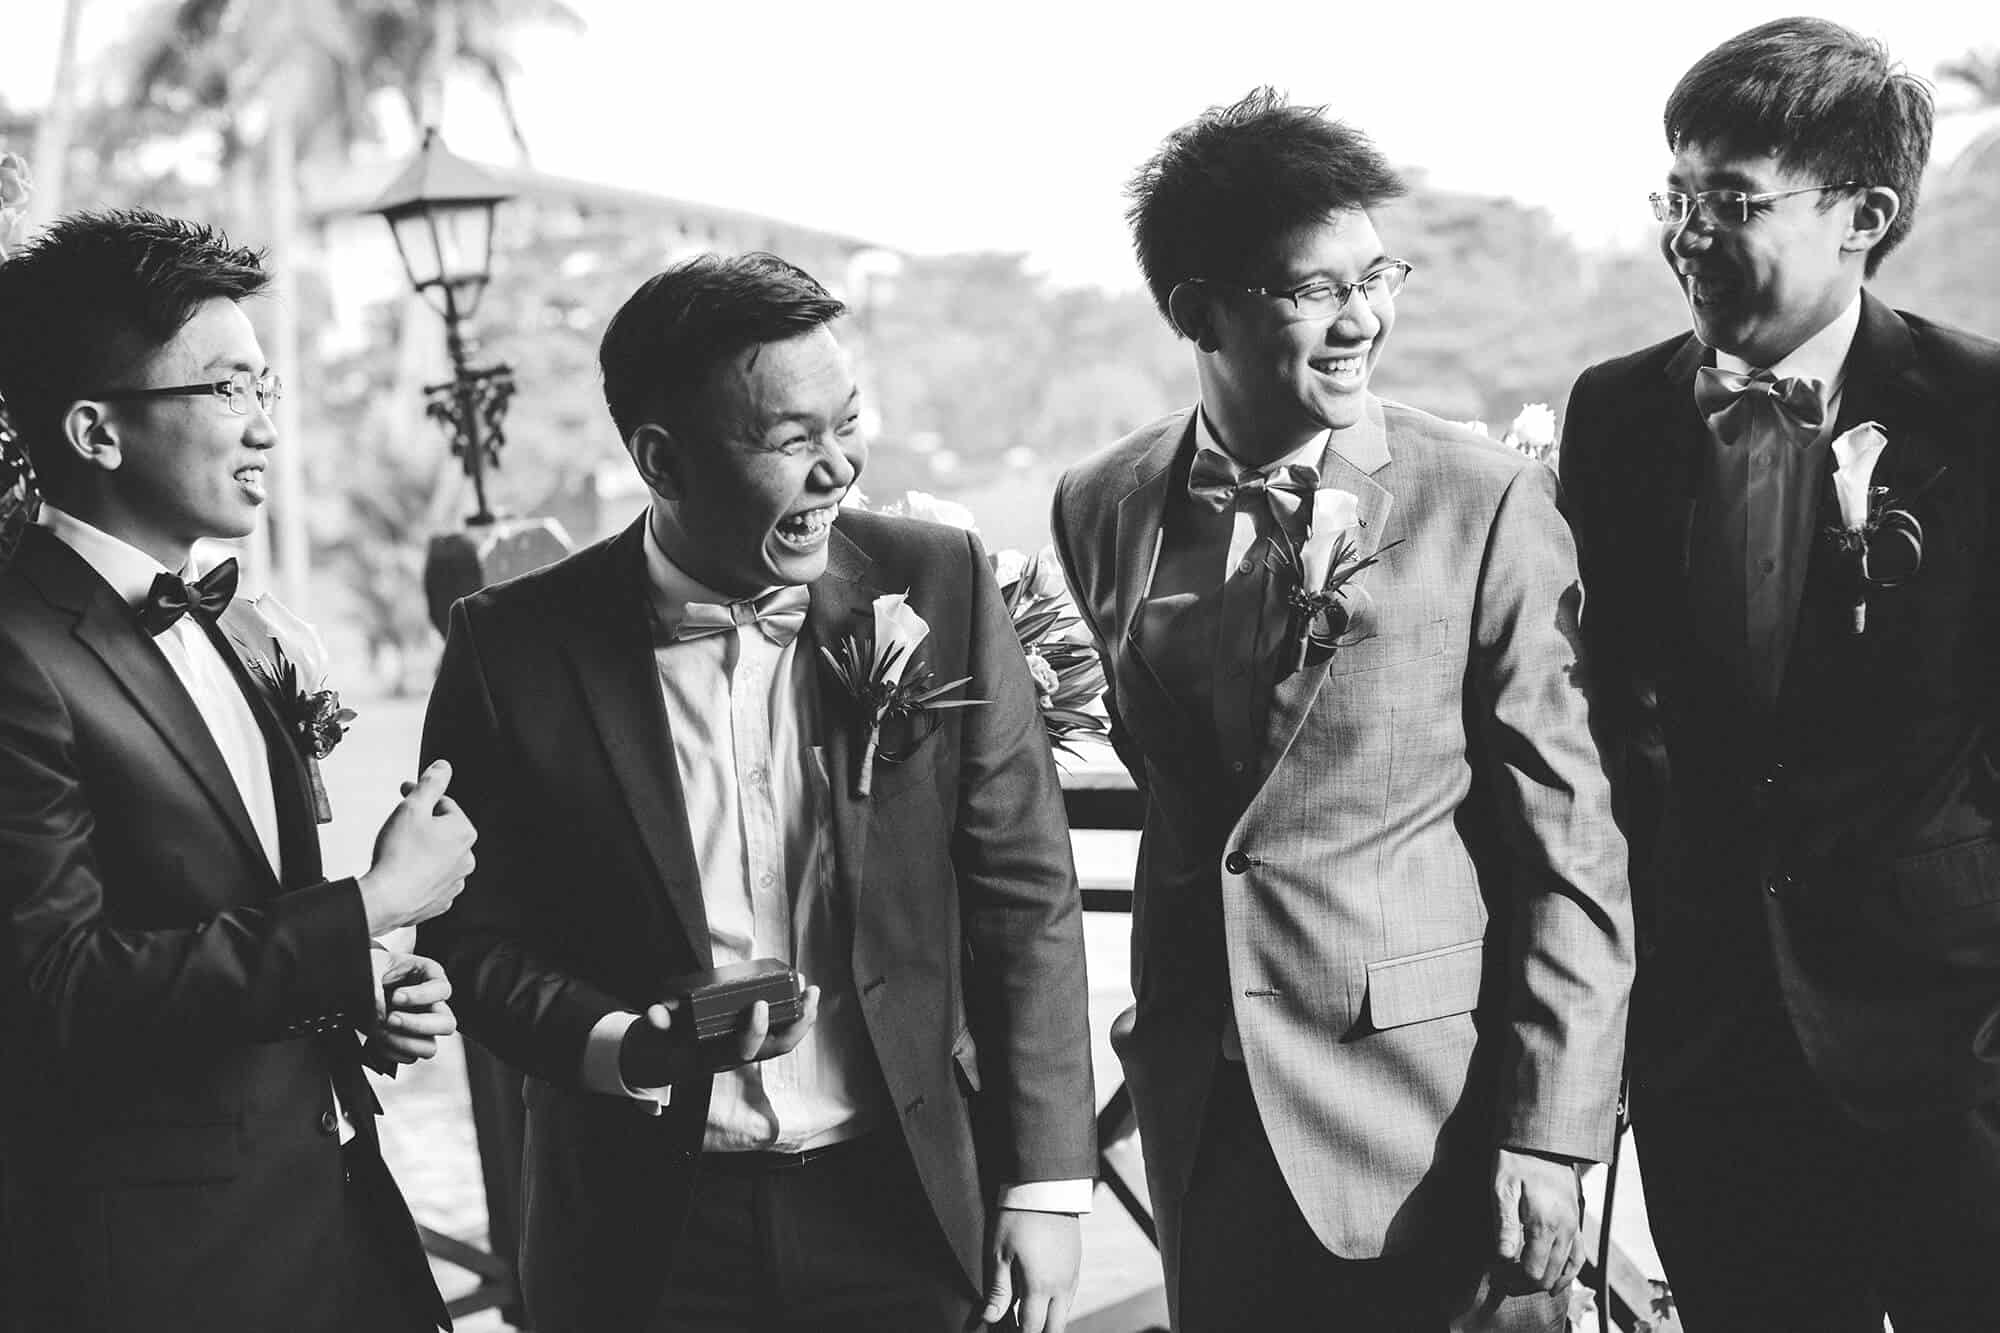 subang saujana hotel and resorts wedding reception malaysia photographer